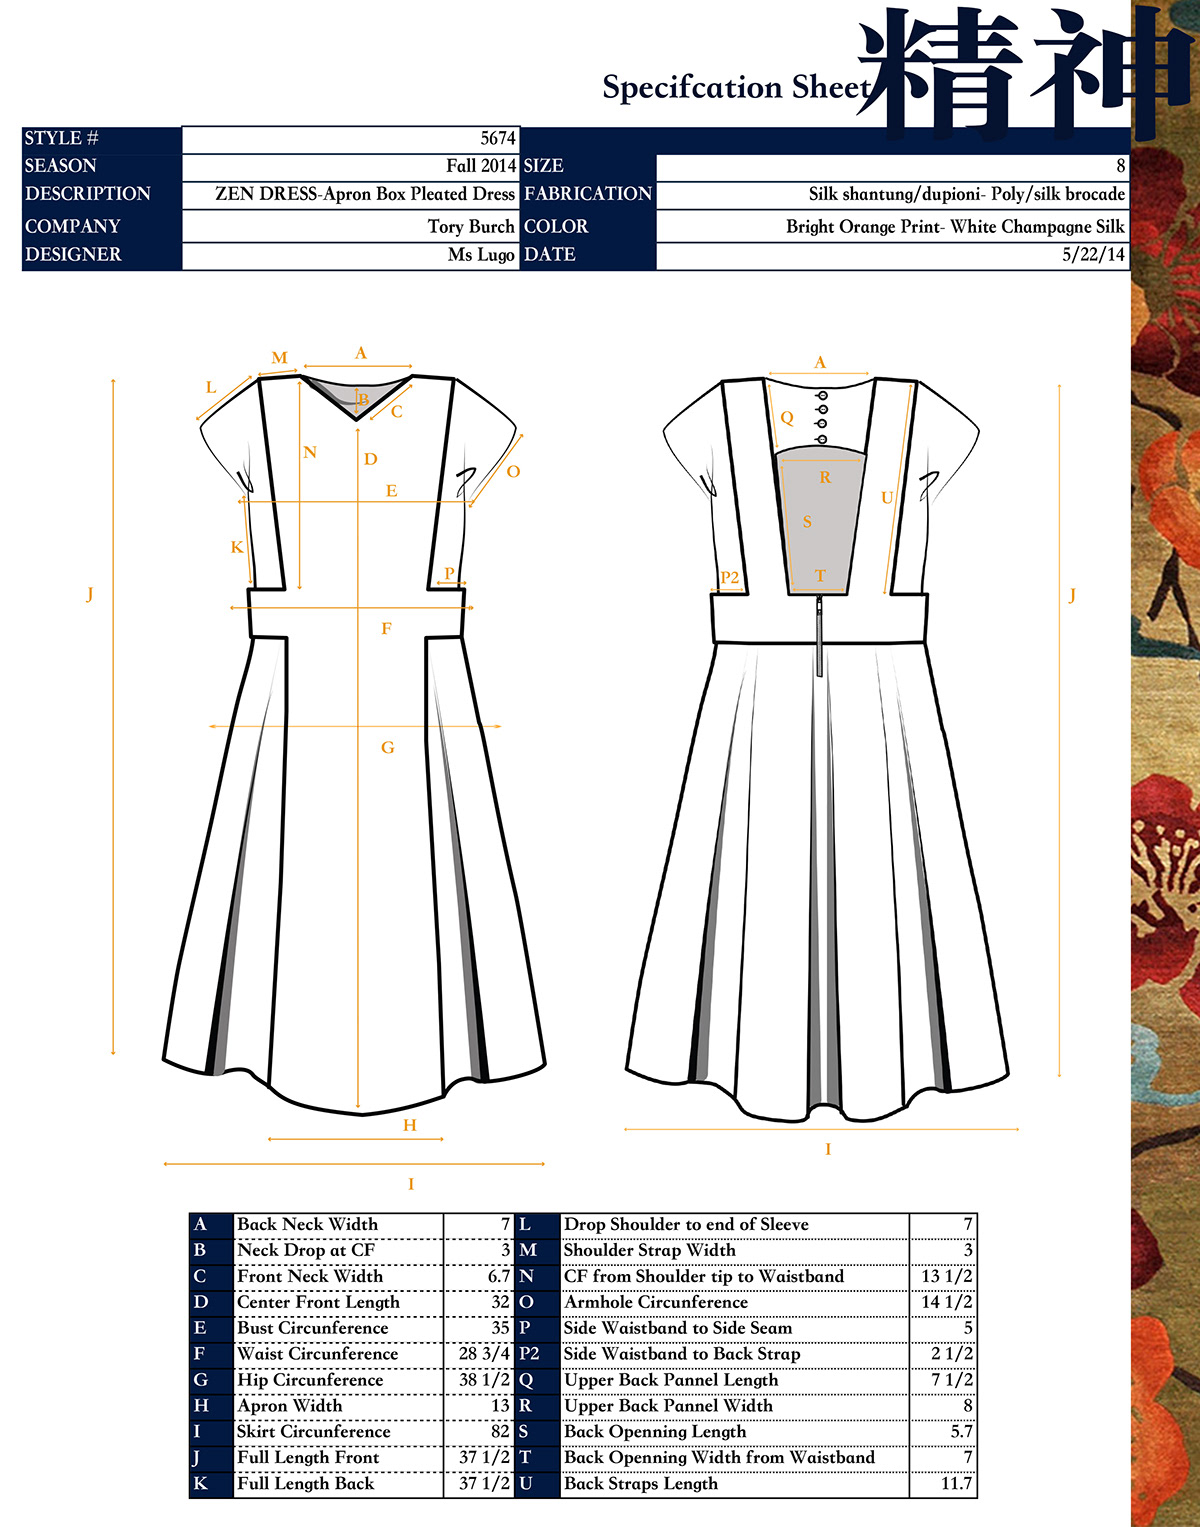 technical flats product development designer apparel spec sheets Apparel Design fashion illustration Collection line up fashion collection